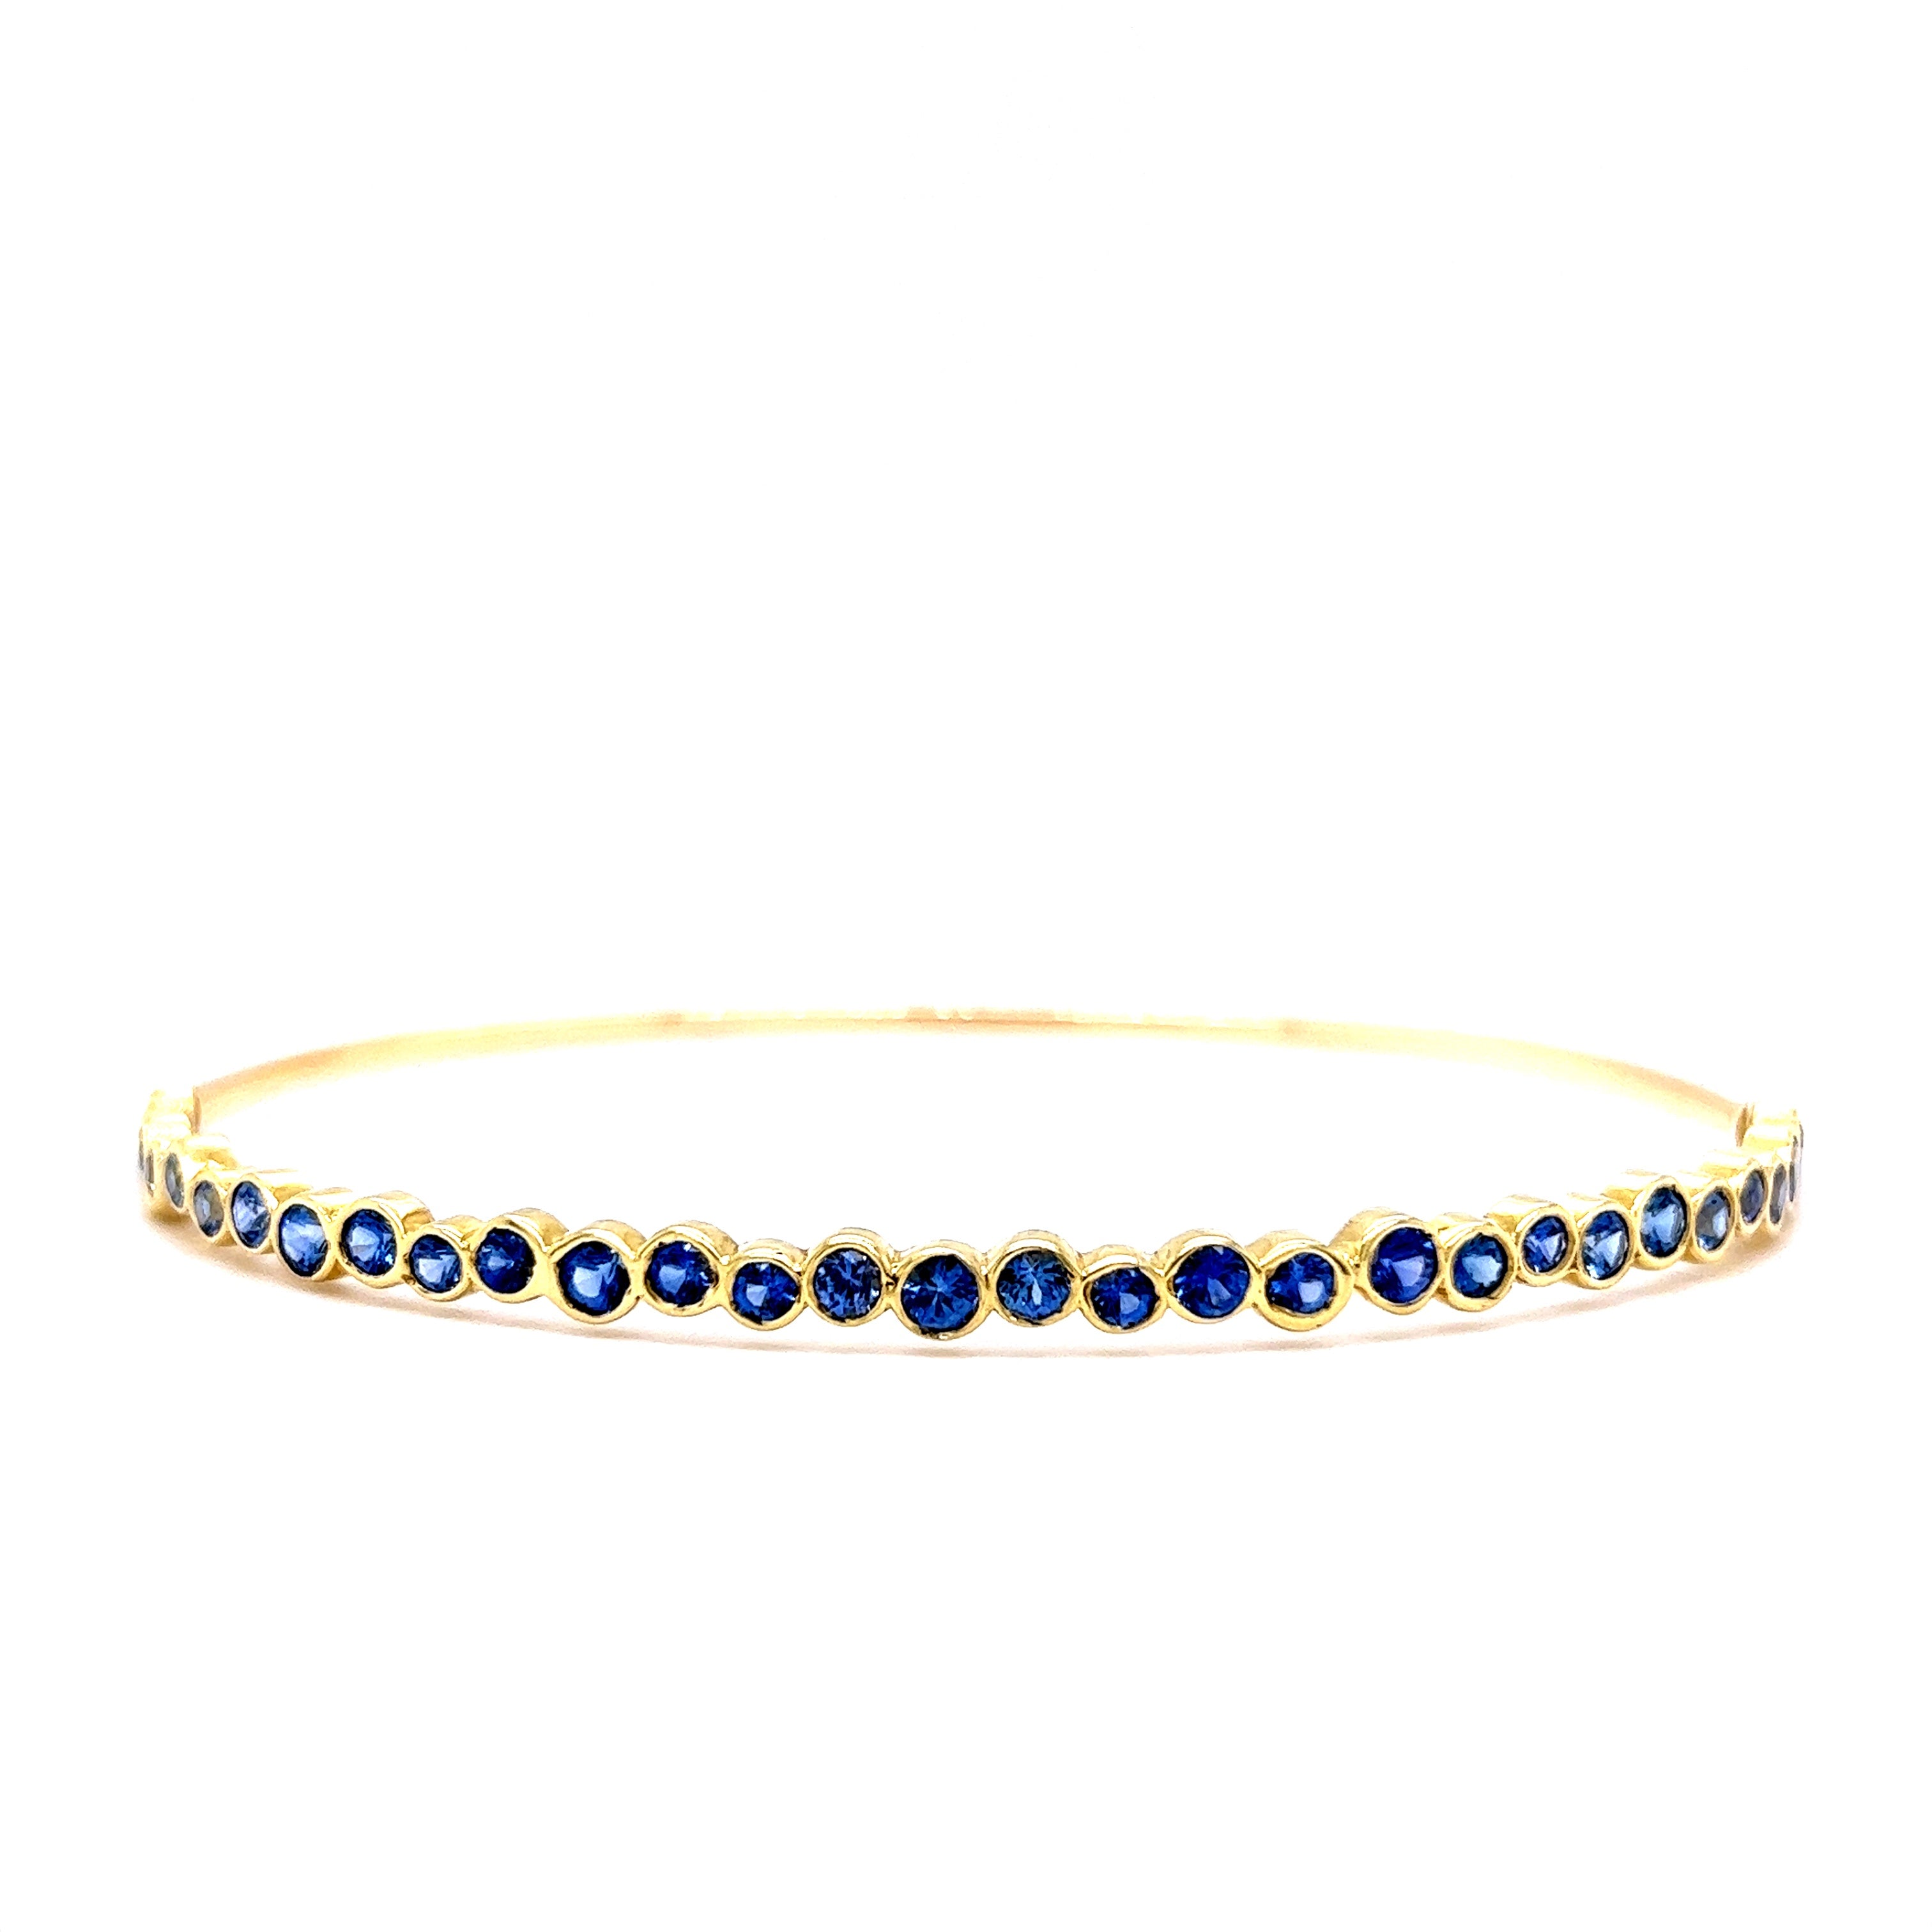 Lab Yellow Sapphire 9mm Briolette Drop AAA Grade Gemstone Beads Strand -  157851